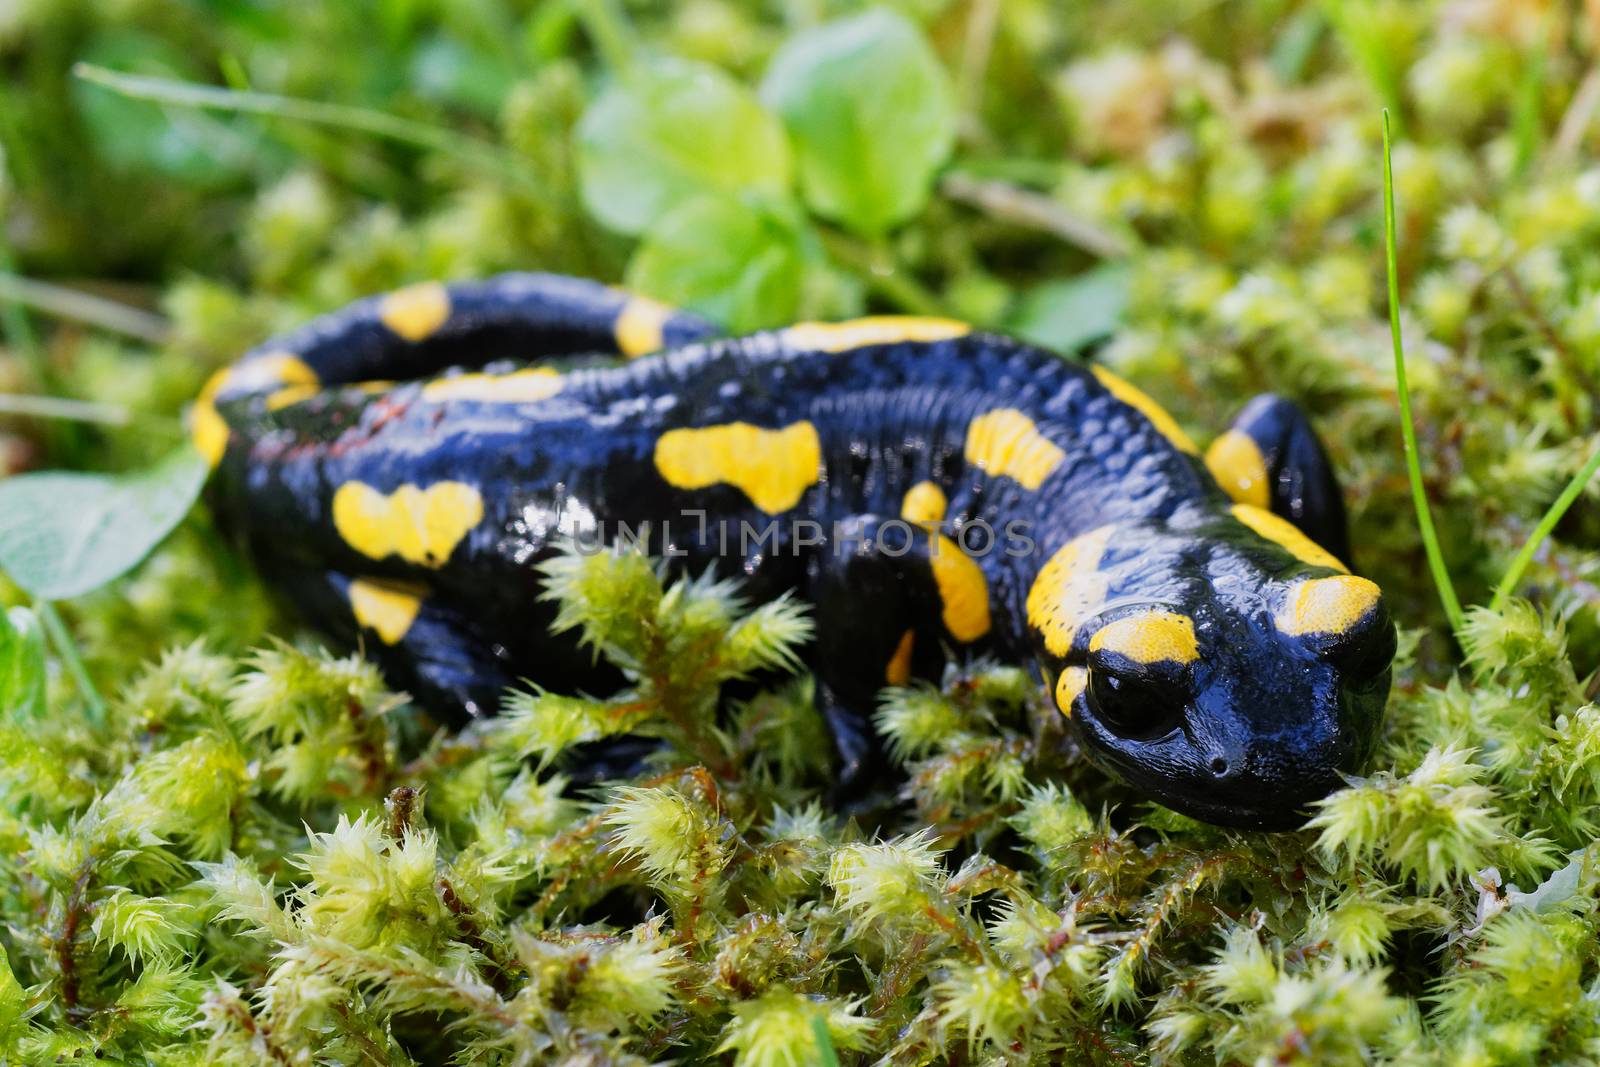 Fire salamander (Salamandra salamandra) in a wild nature